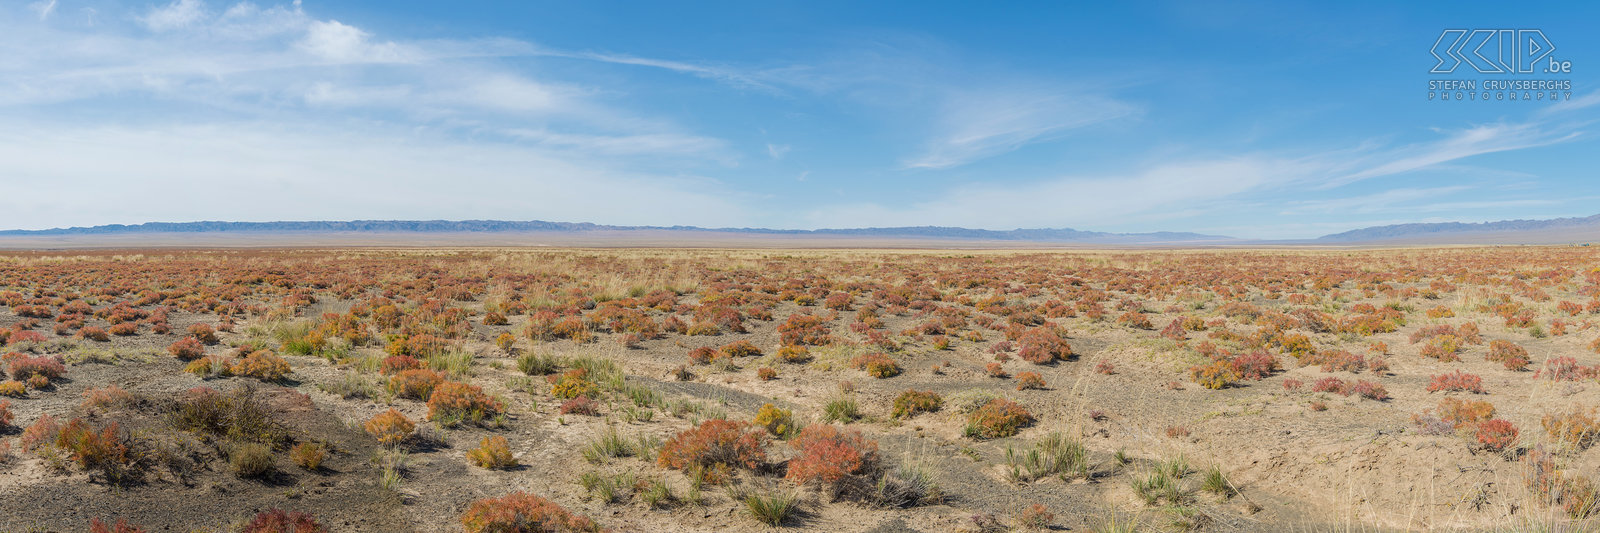 Gobi Immense steppevlakte in de Gobi woestijn met vele struikjes in allerlei oranje en rode herfstkleuren. Stefan Cruysberghs